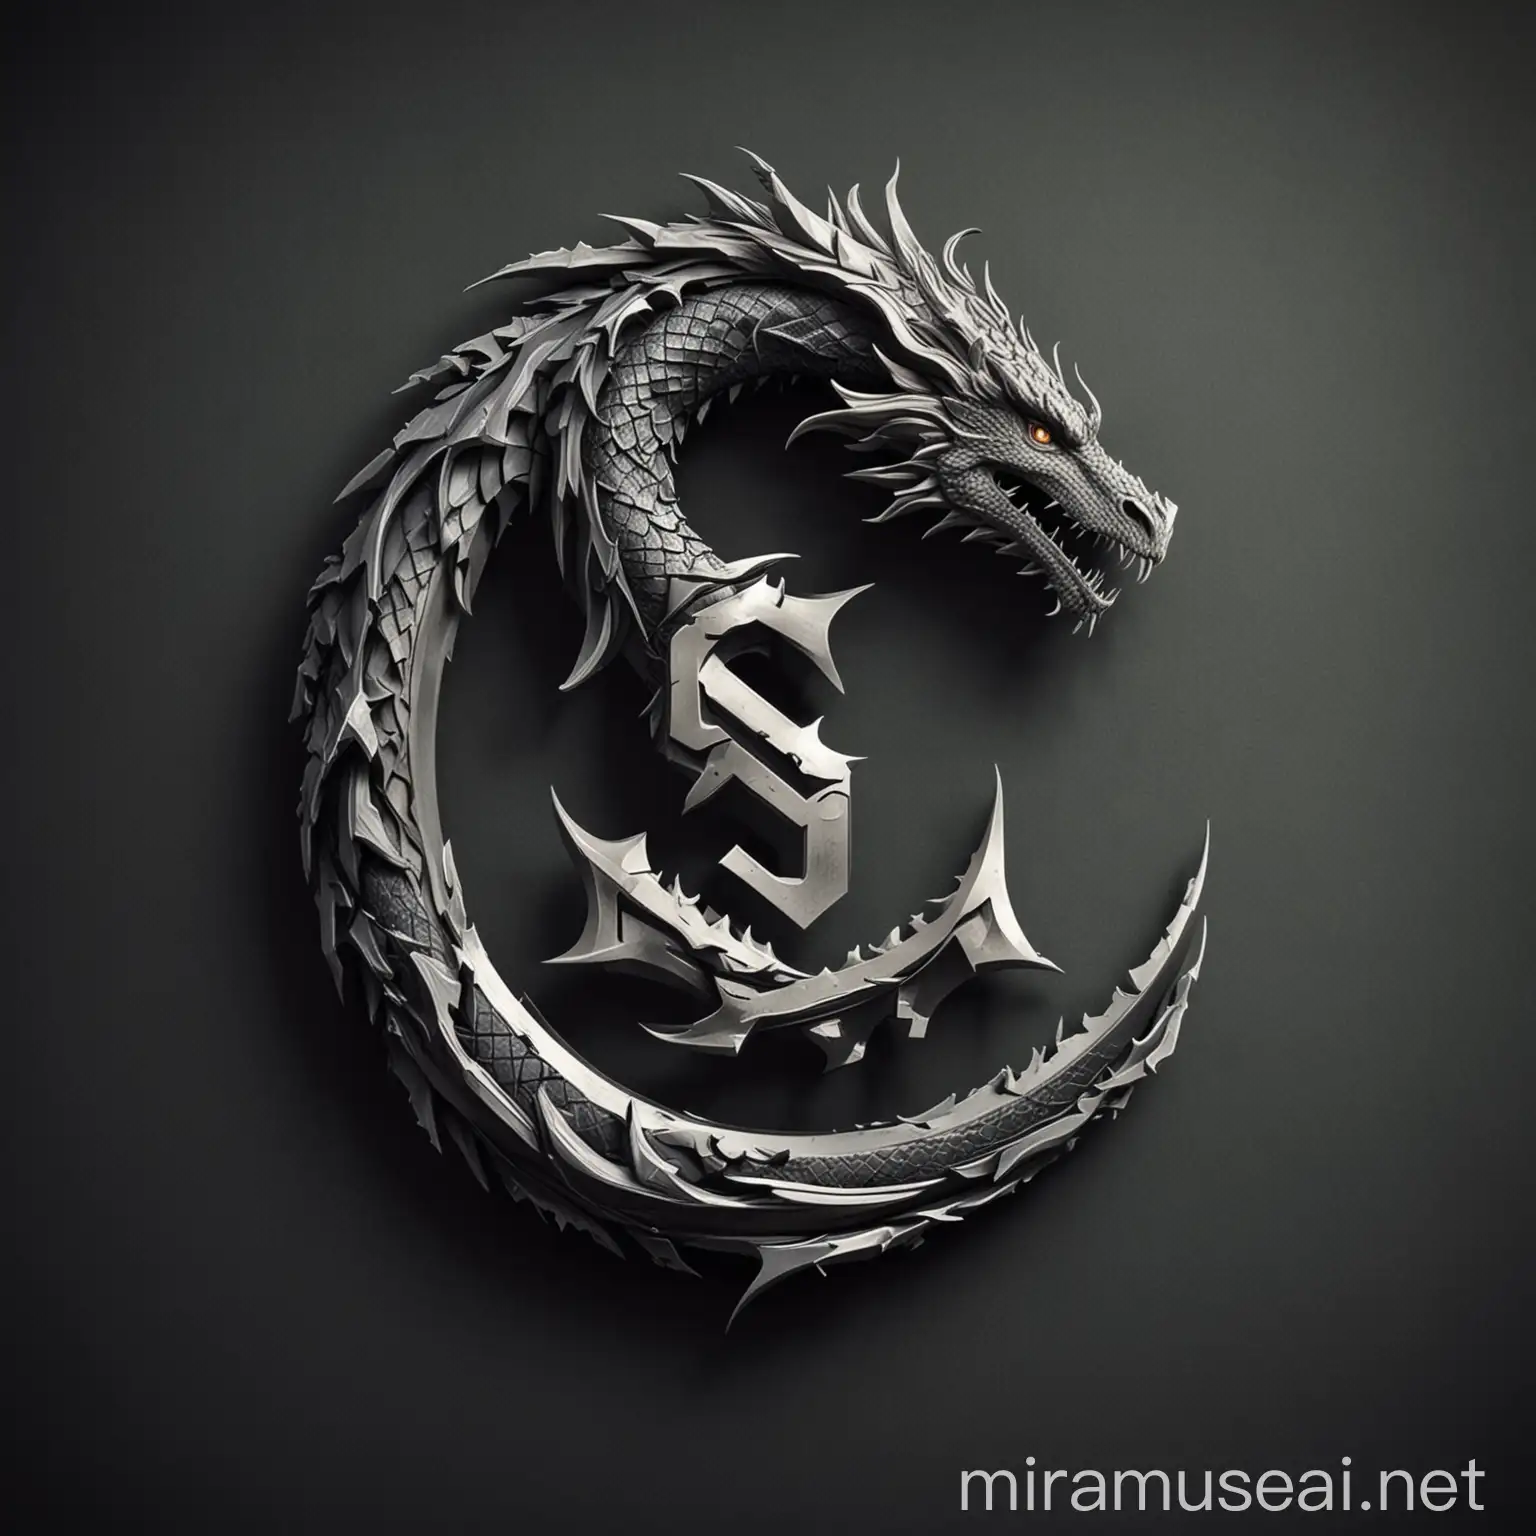 DragonShaped Big Letter S Logo with Swords